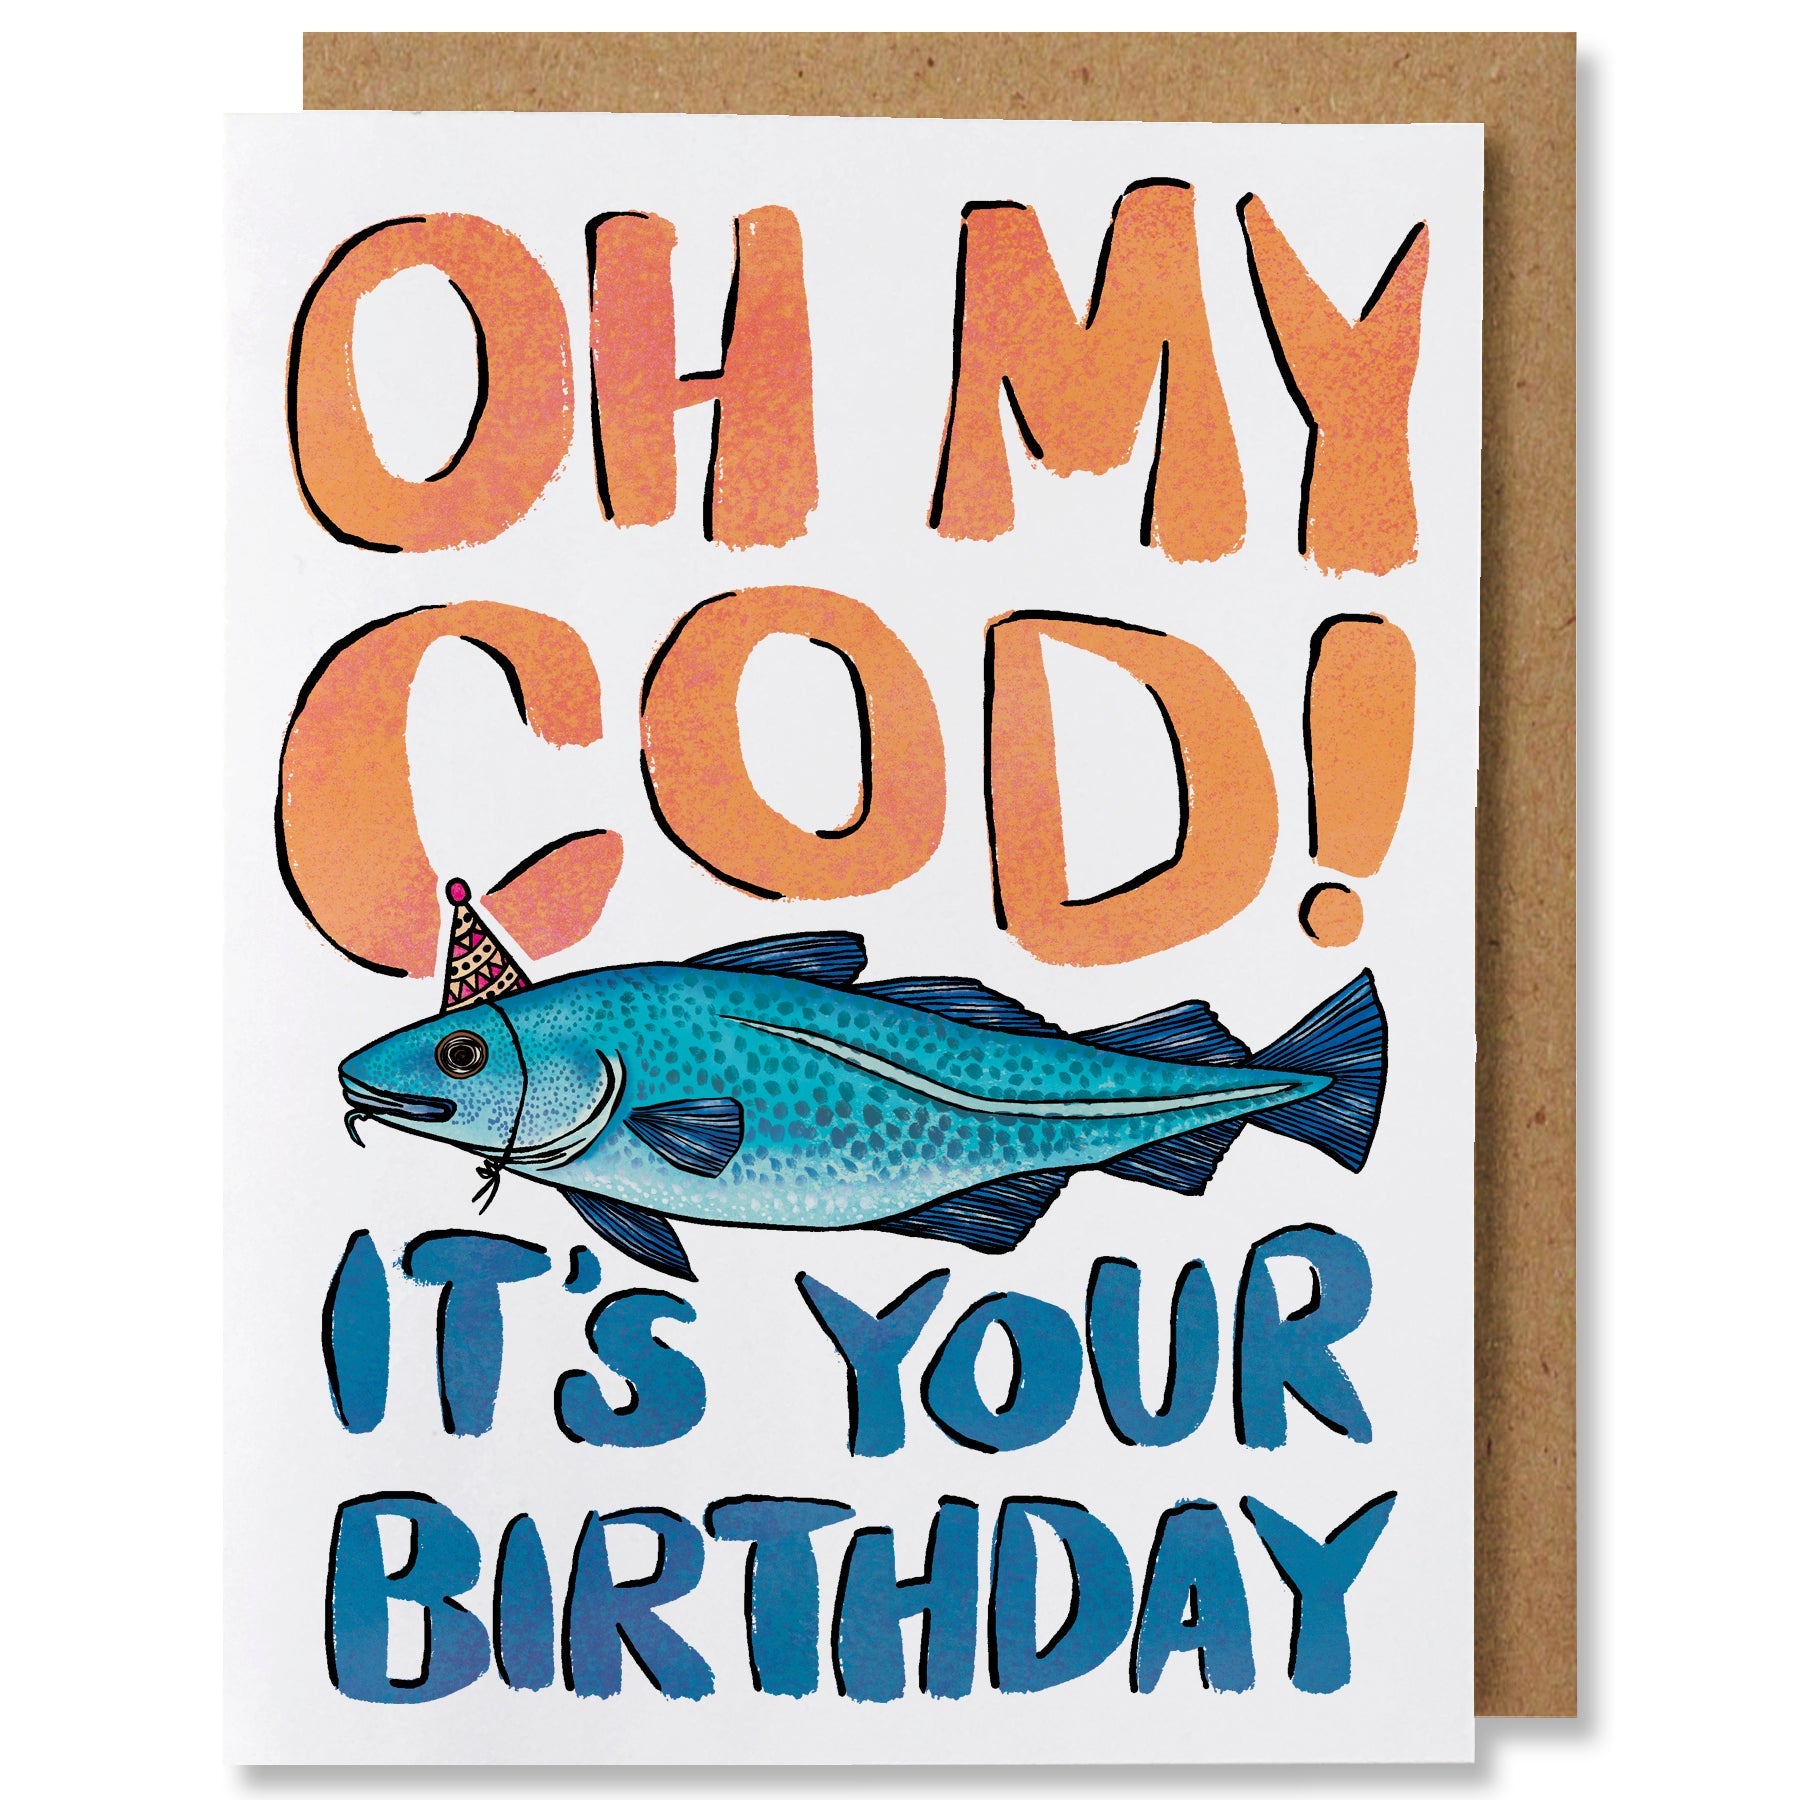  Ulbeelol Cod Fish Themed Funny Birthday Card - GOT